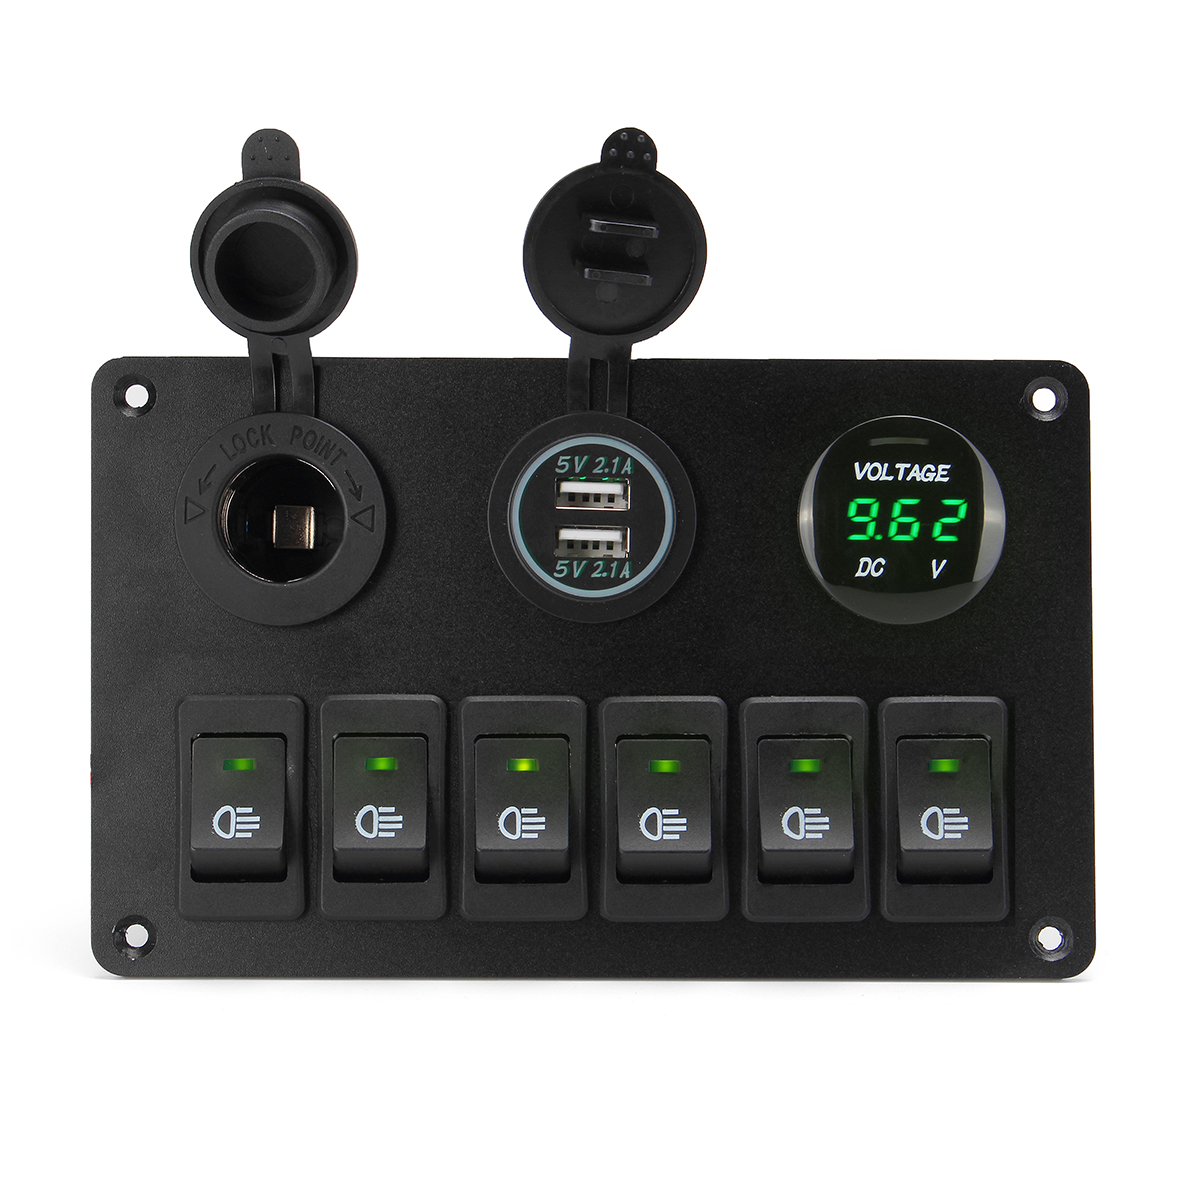 

6 Gang ON-OFF Toggle Rocker Switch Panel with Dual USB Charger Port Lighter LED Voltmeter 12-24V for Car Boat Marine RV Truck